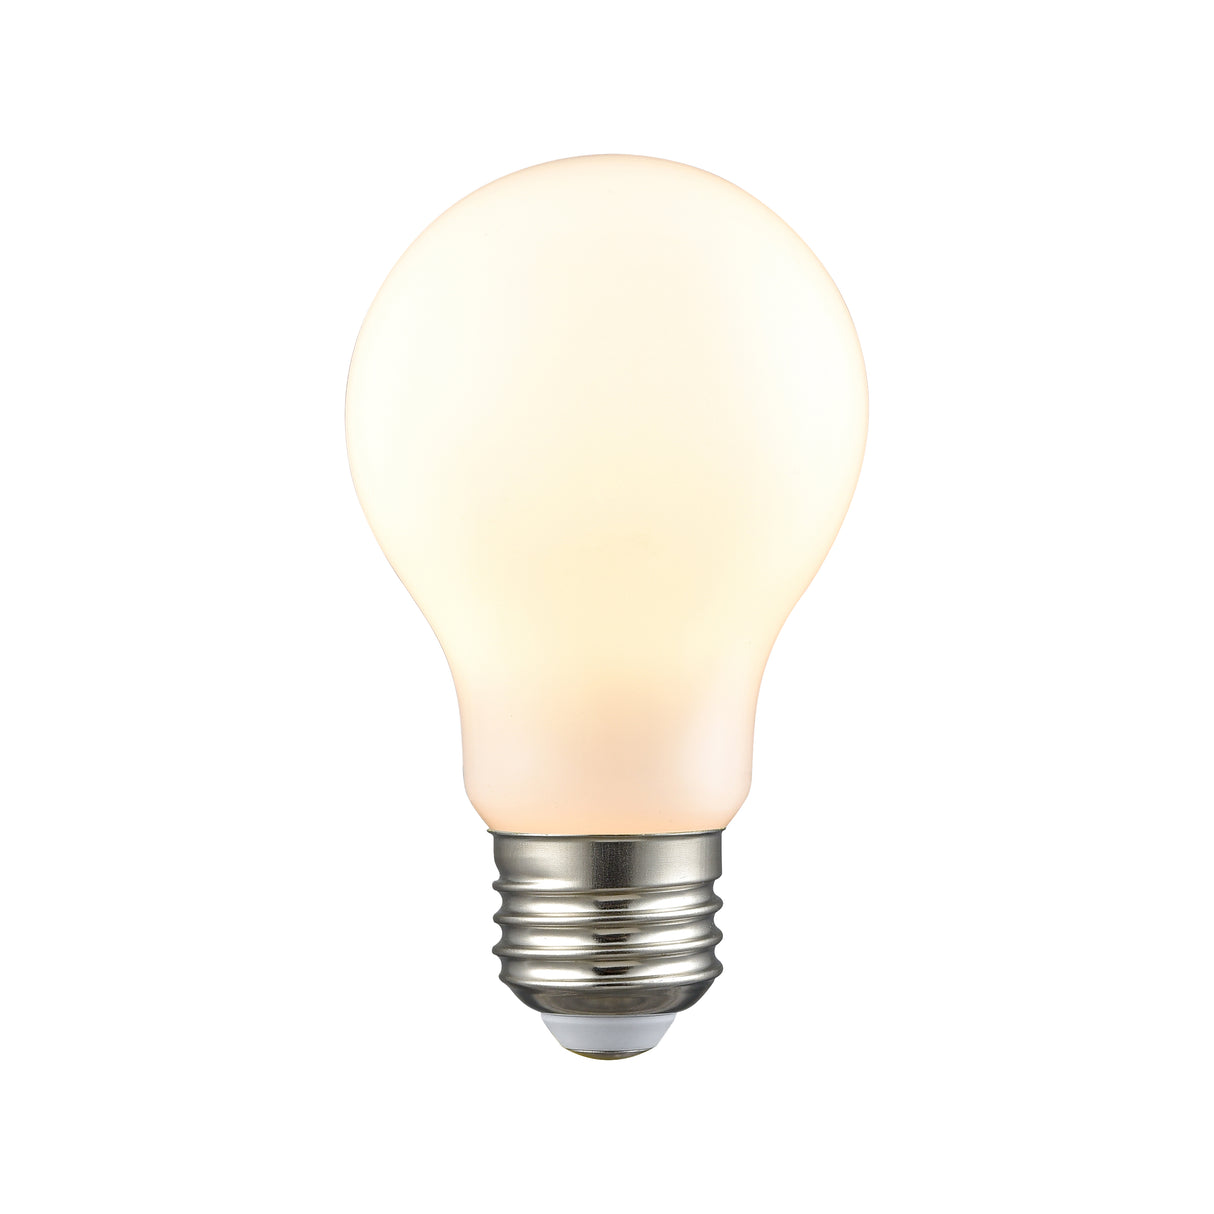 Elk 1133 LED Medium Bulb - Shape A19, Base E26, 2700K - Frosted